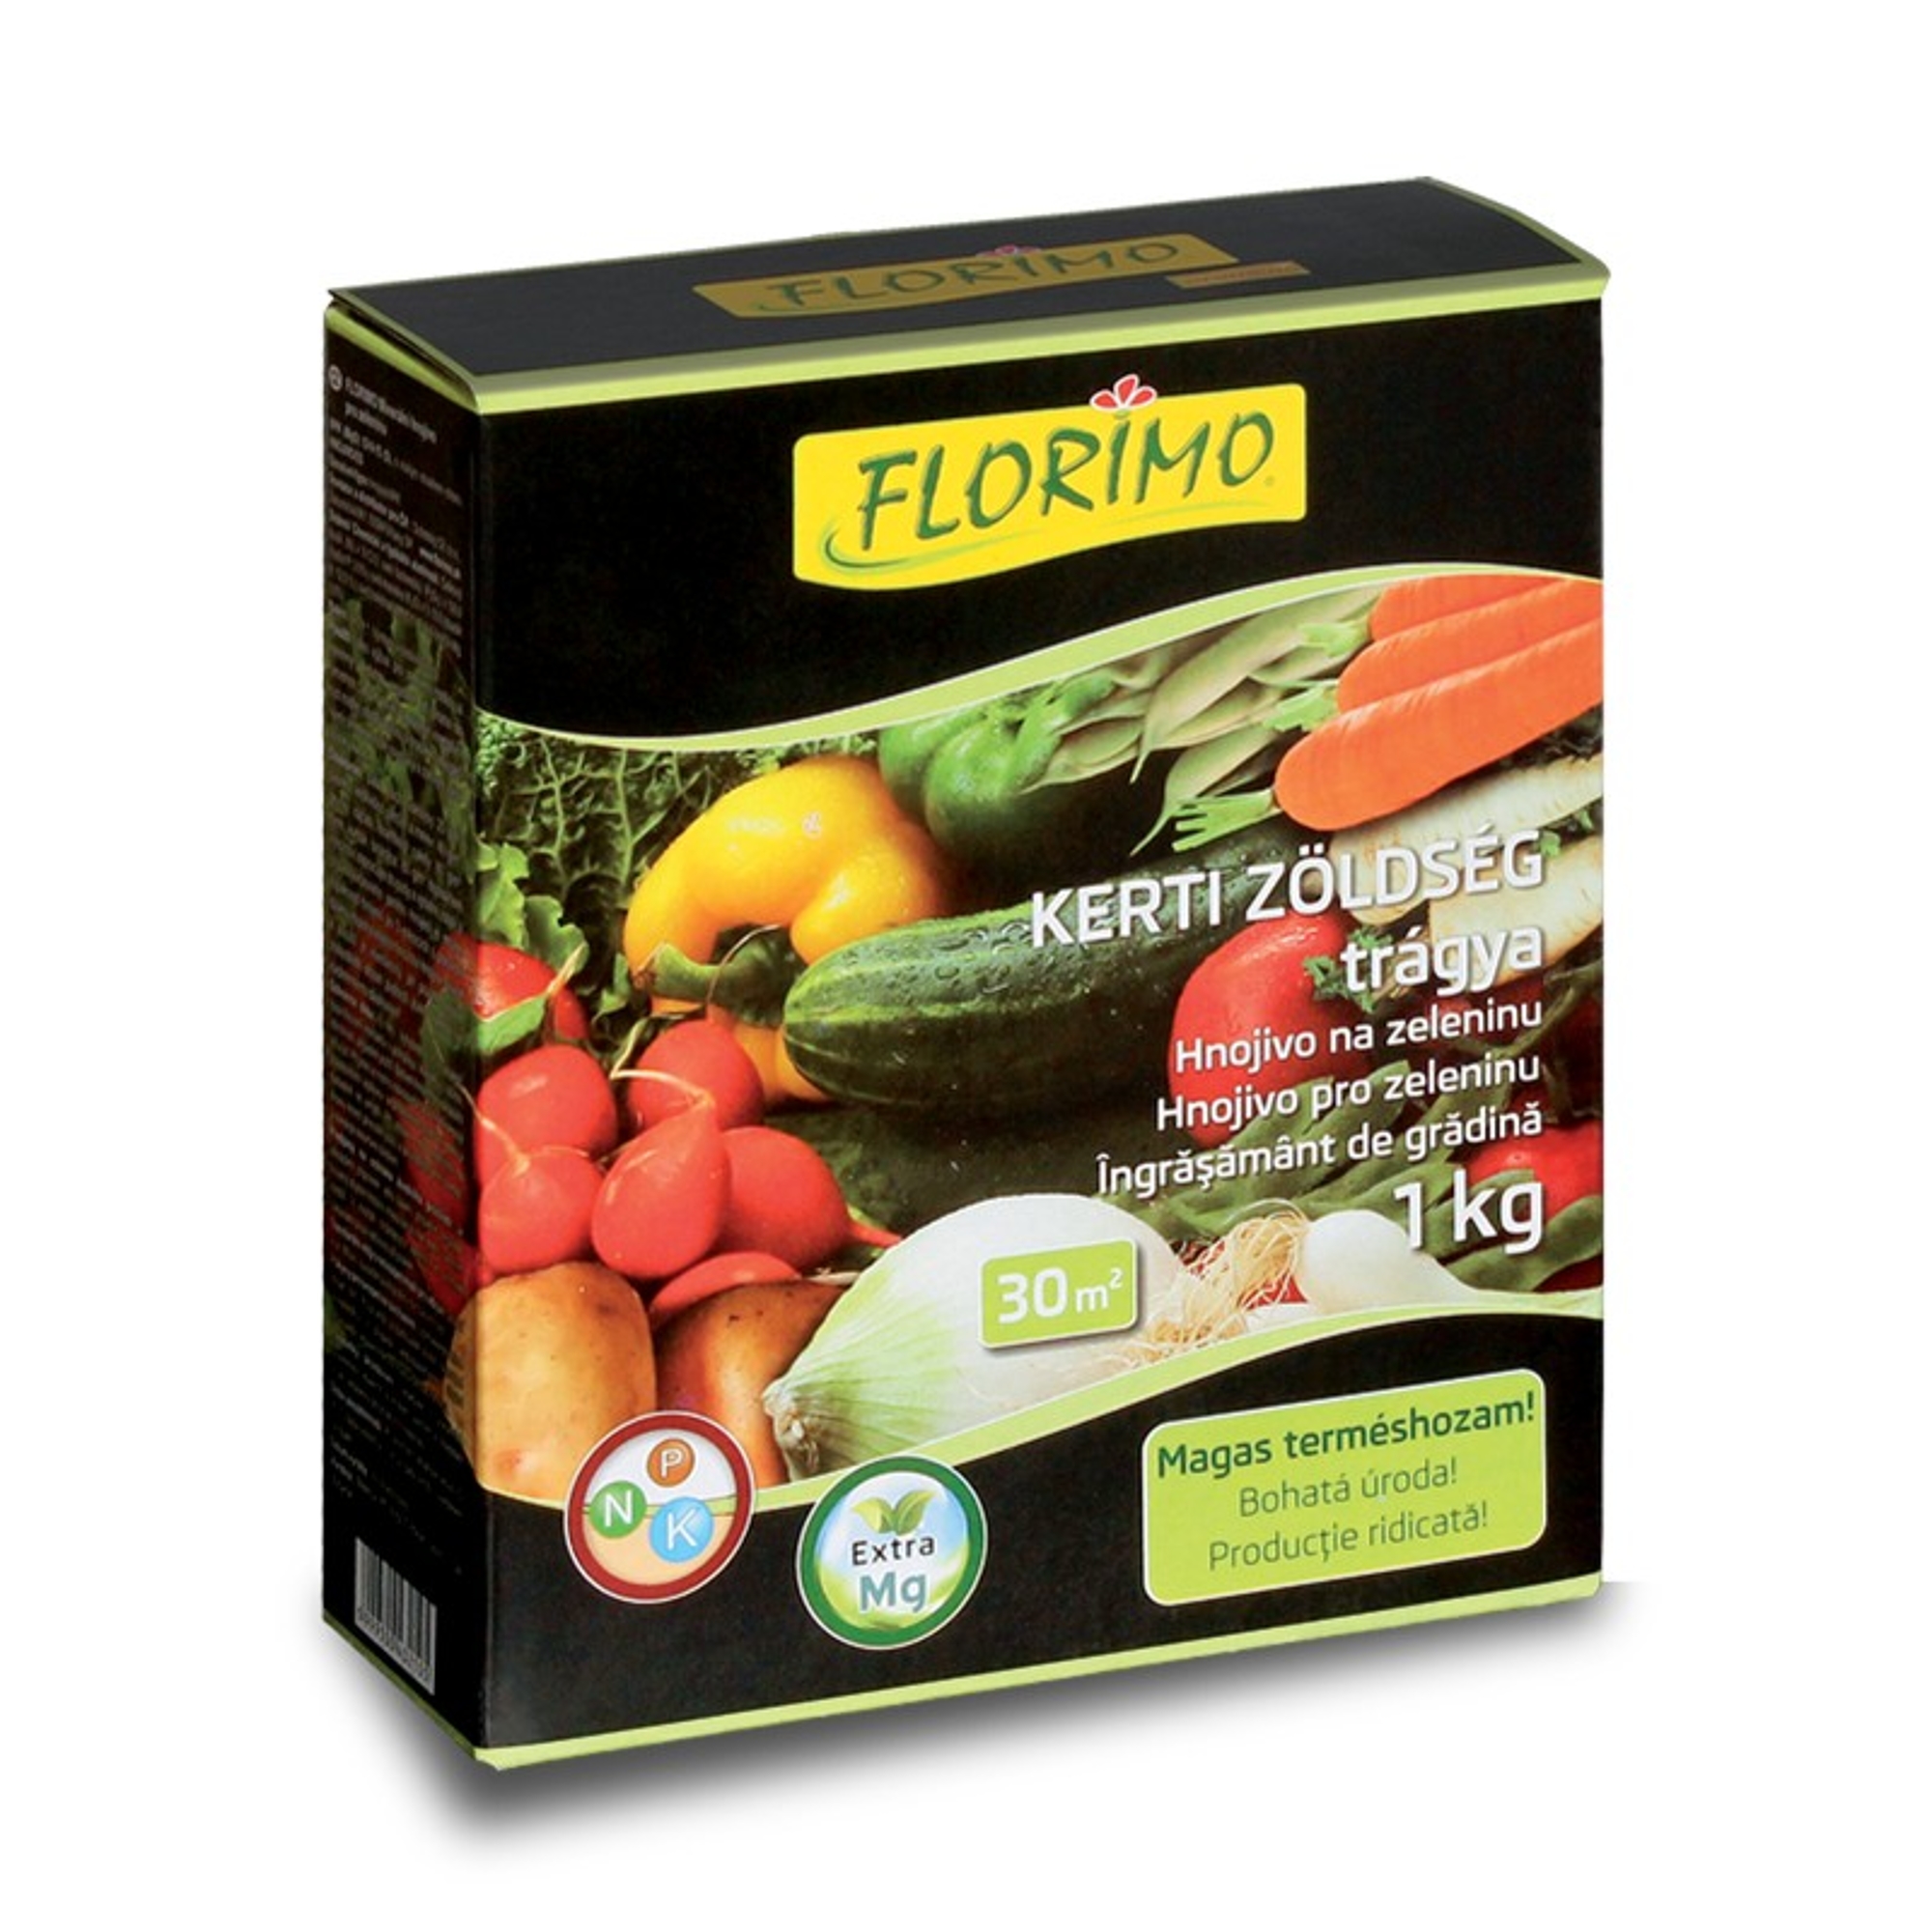 Florimo kerti zöldség trágya / doboz / 1 kg